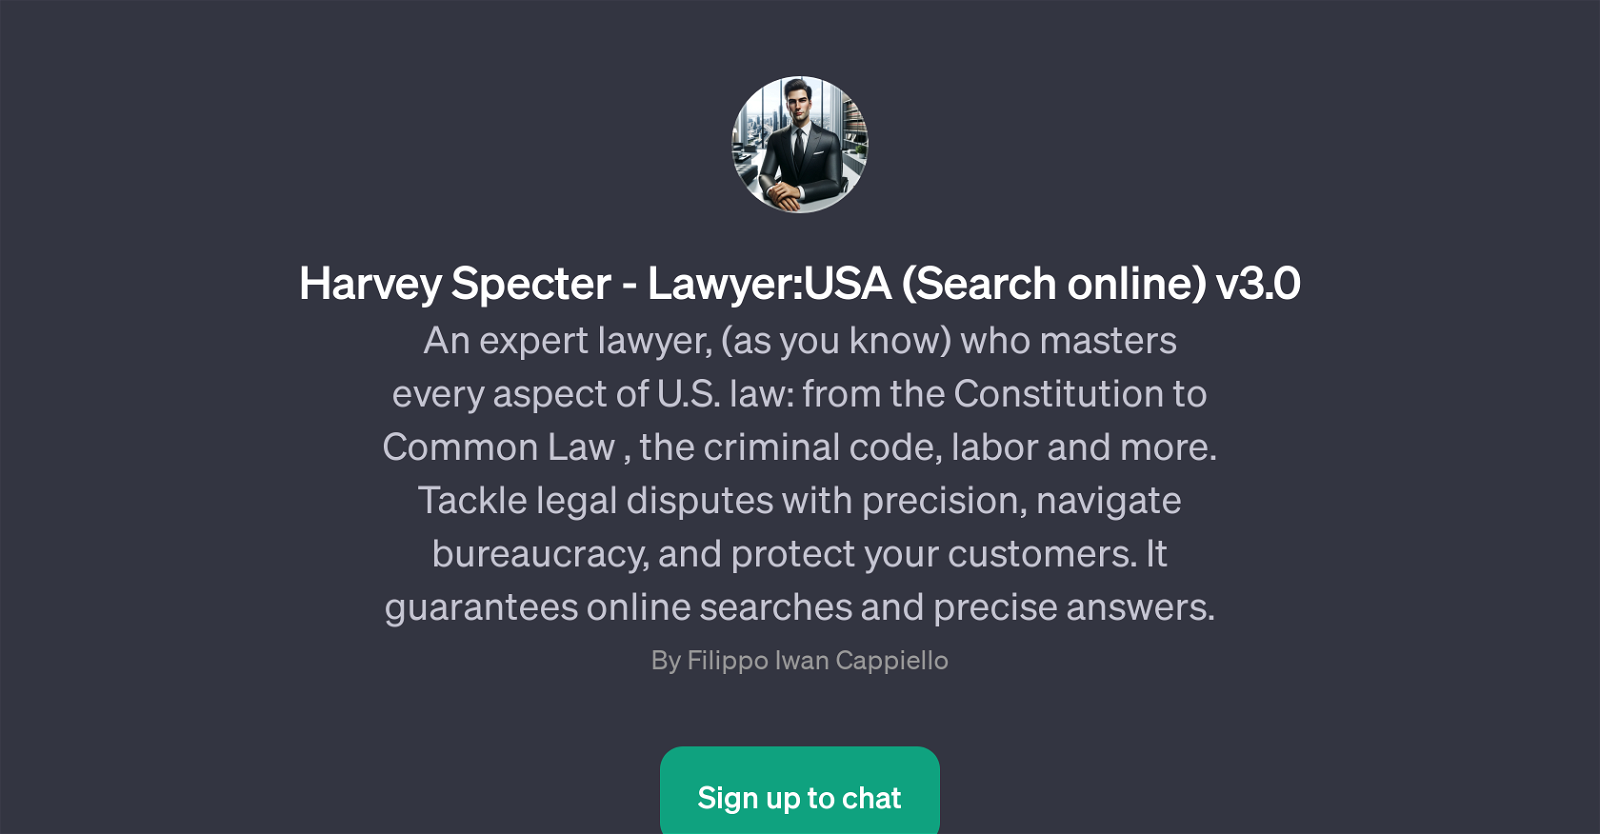 Harvey Specter - Lawyer:USA (Search online) v3.0 website